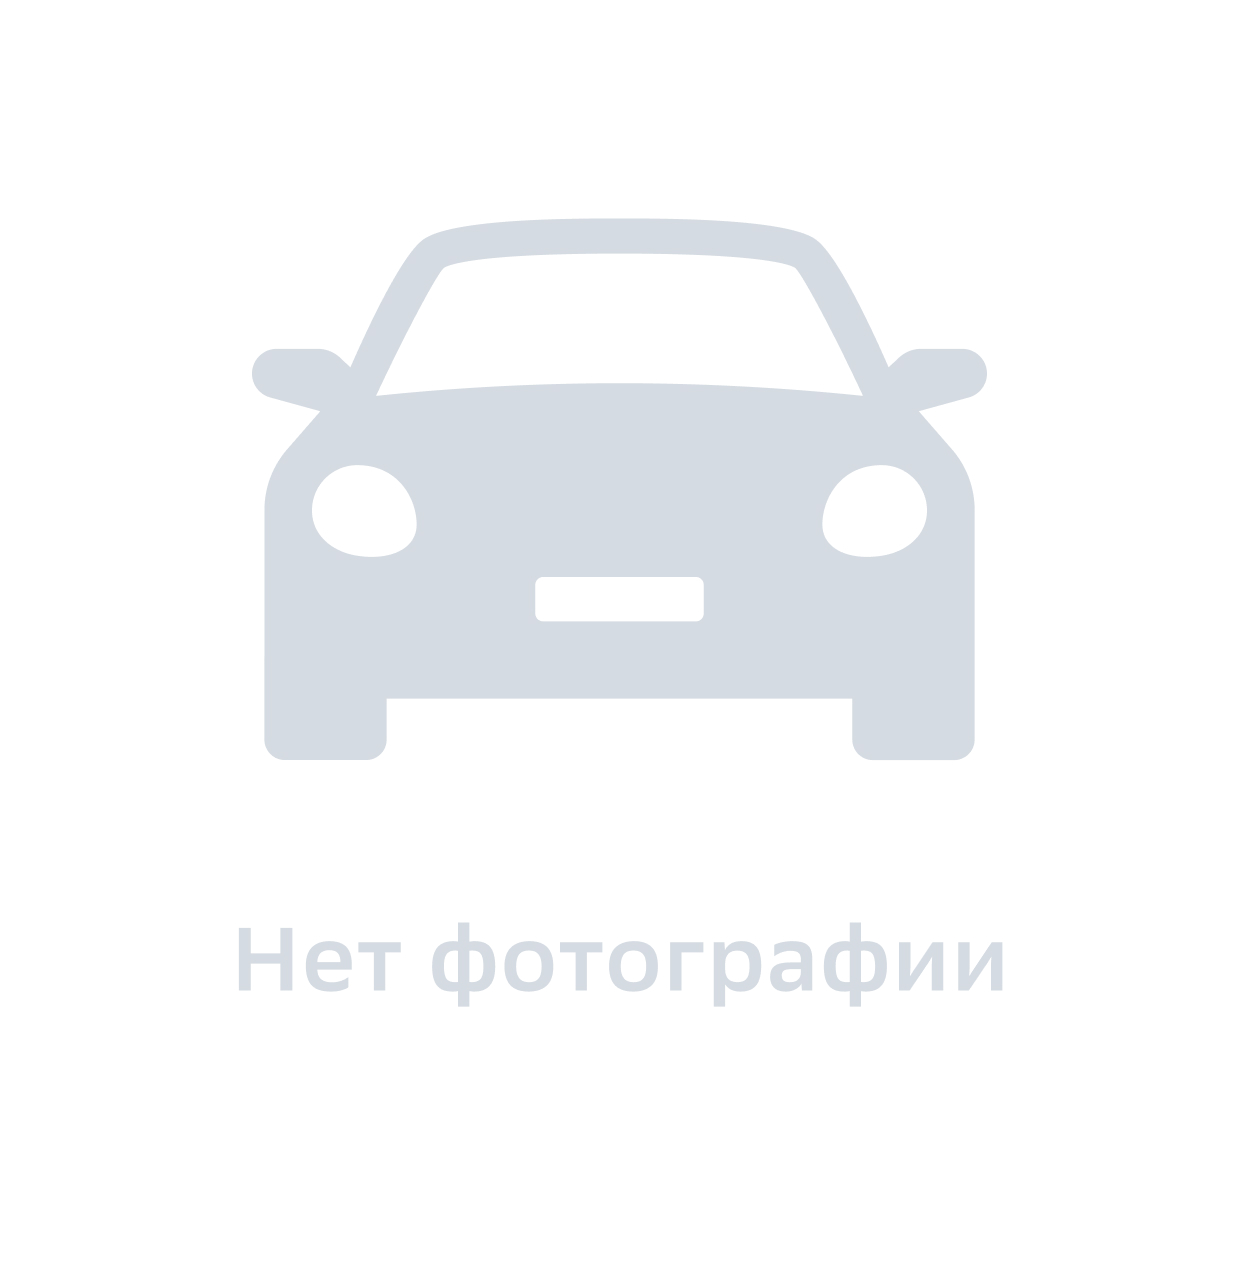 RIGINAL Вискомуфта для а/м Audi A4 2.4/2.6,VW Passat 2.8 RIGINAL